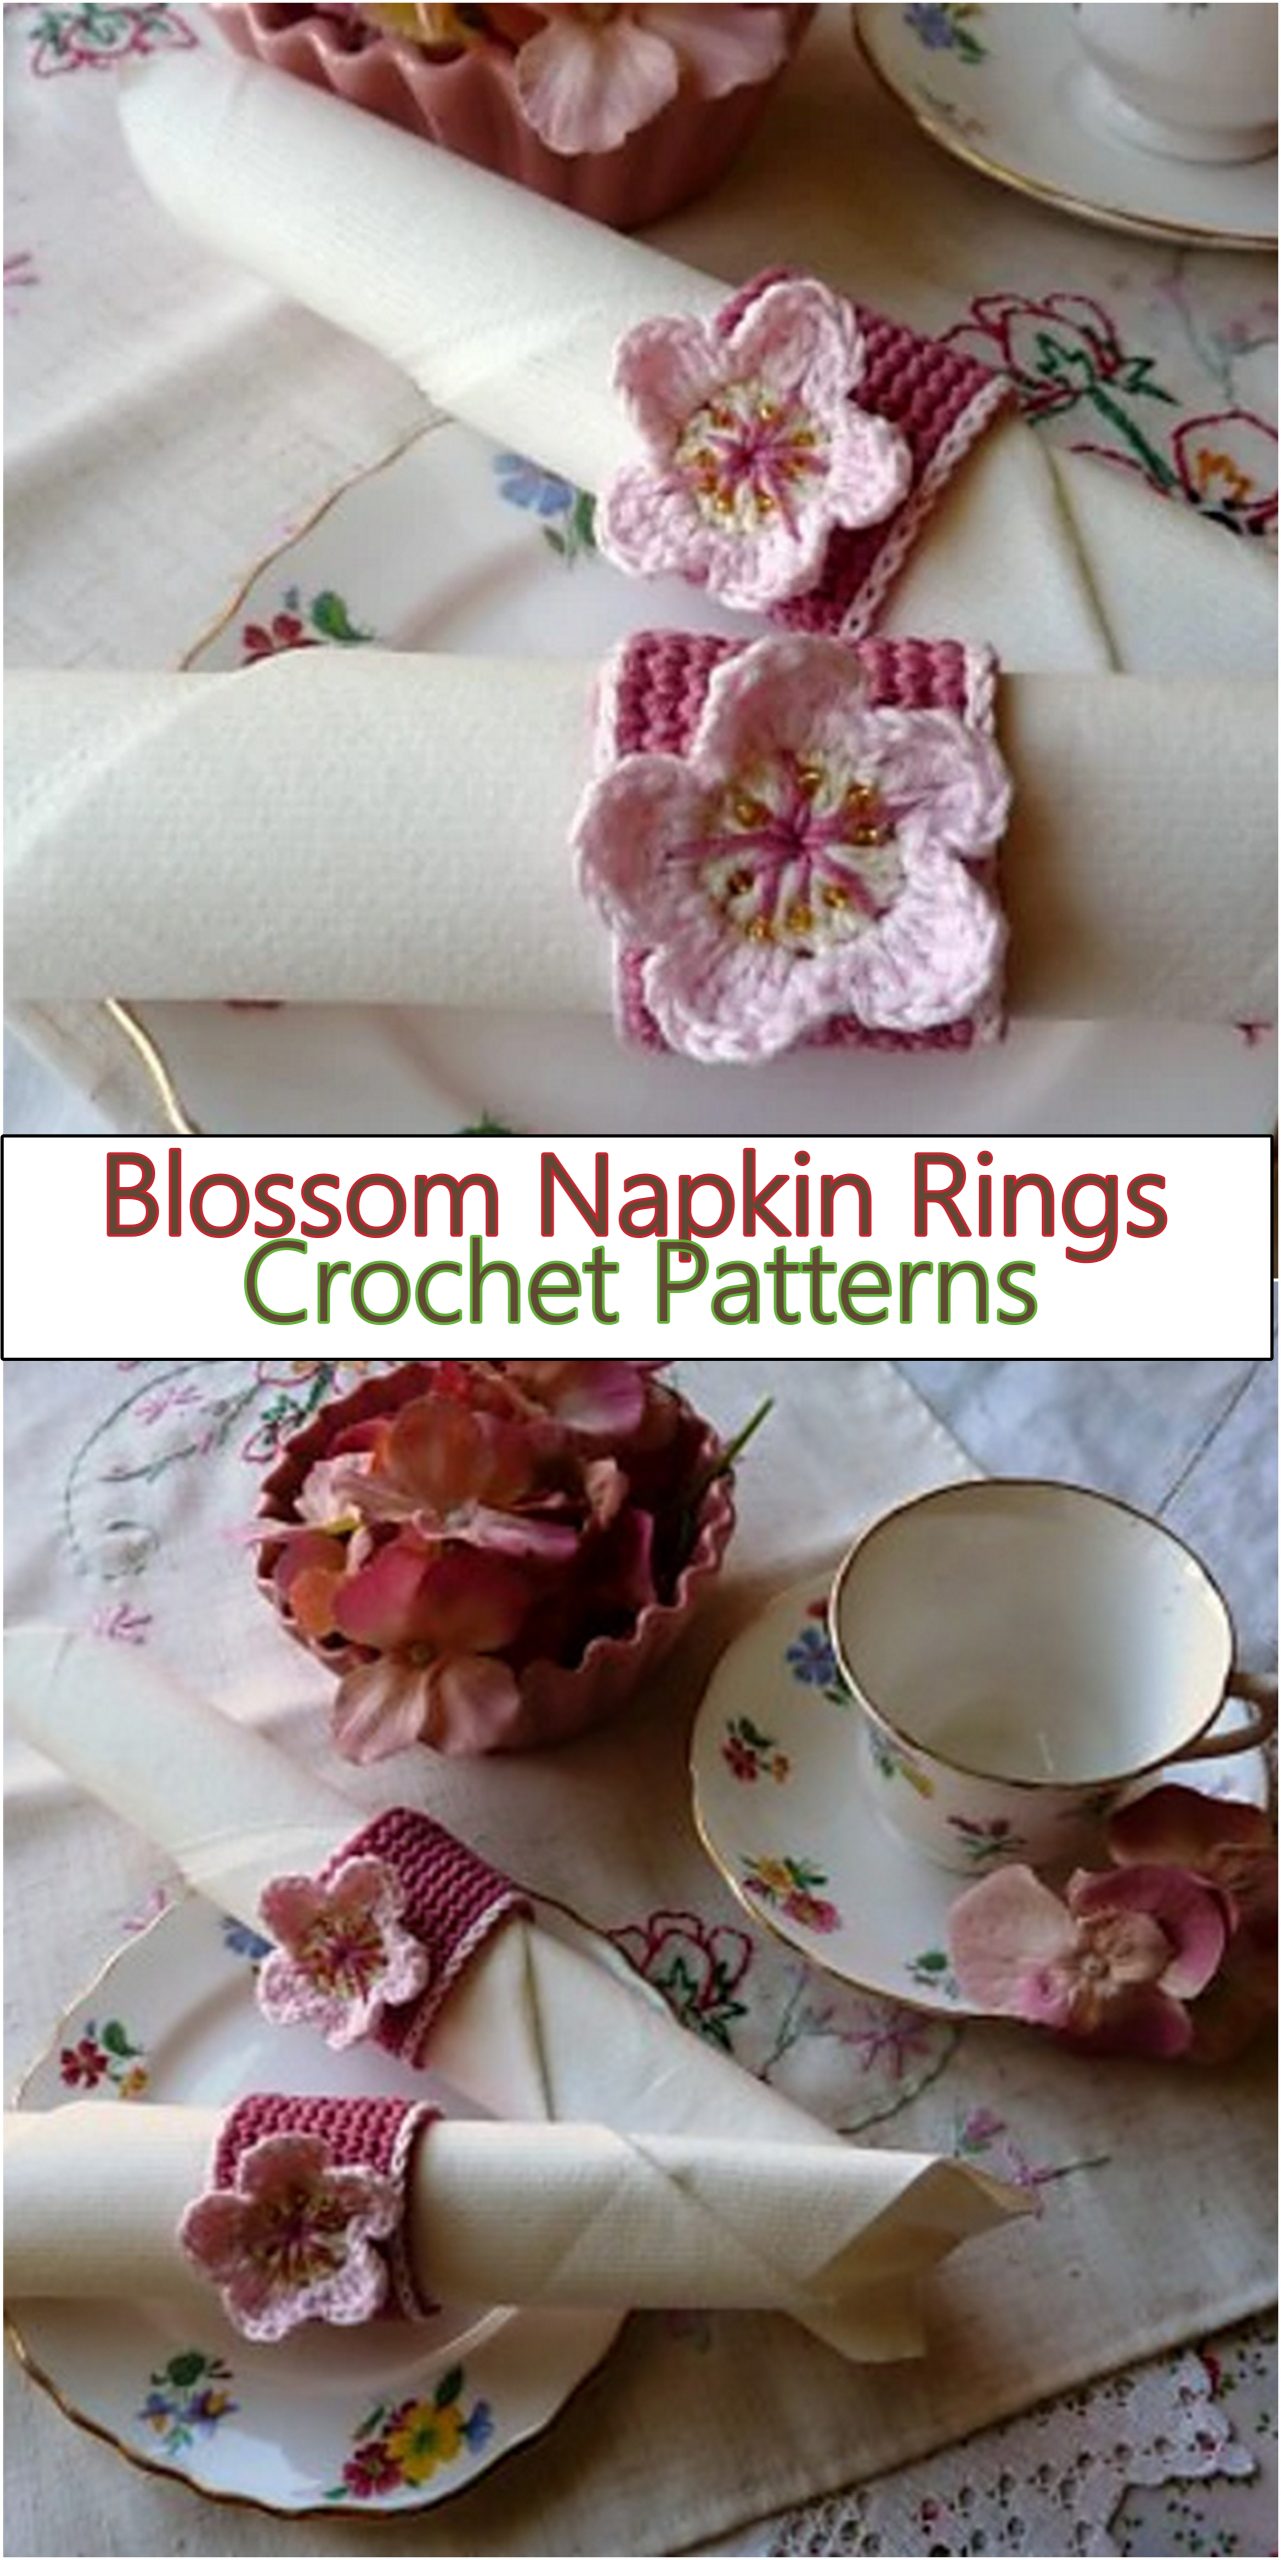 Blossom Napkin Rings